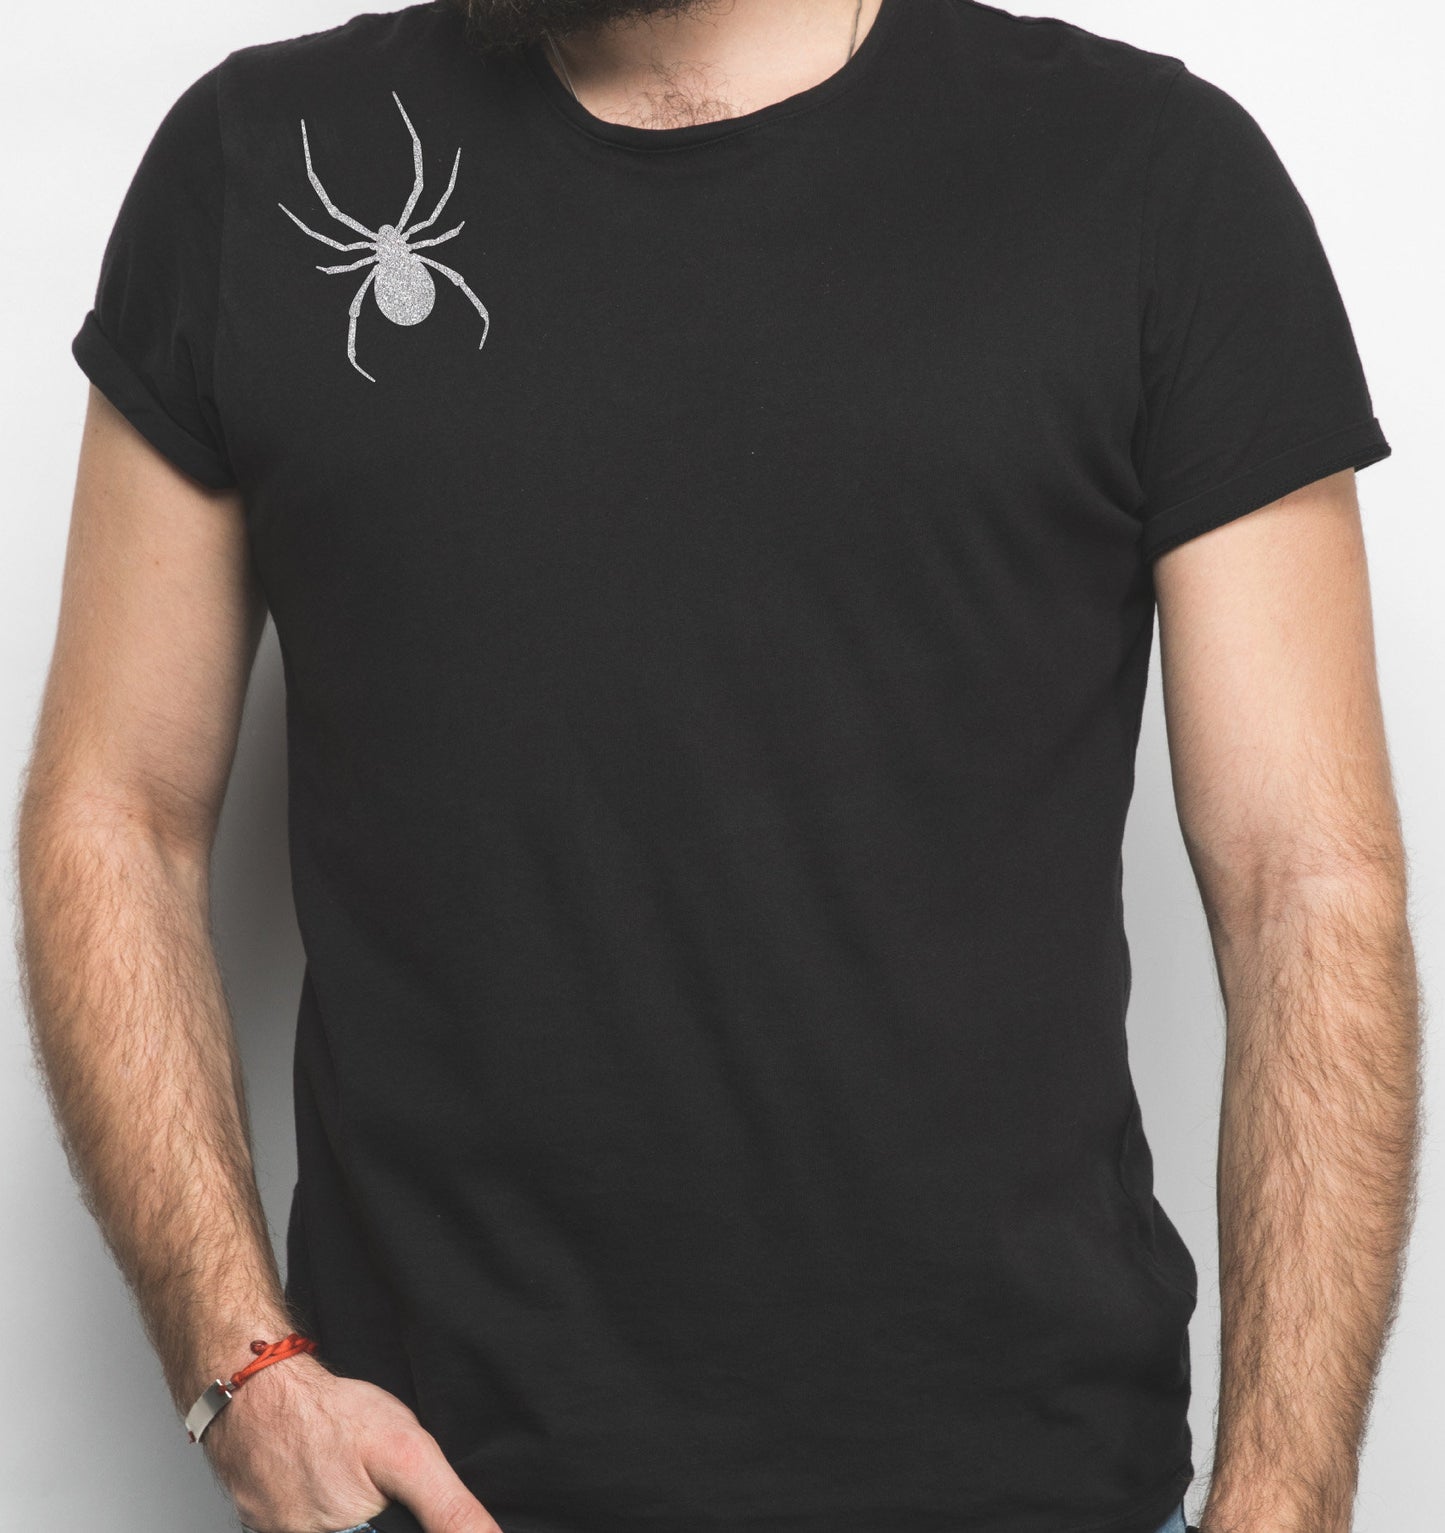 Spider "Brooch" T-Shirt - Silver Glitter motif